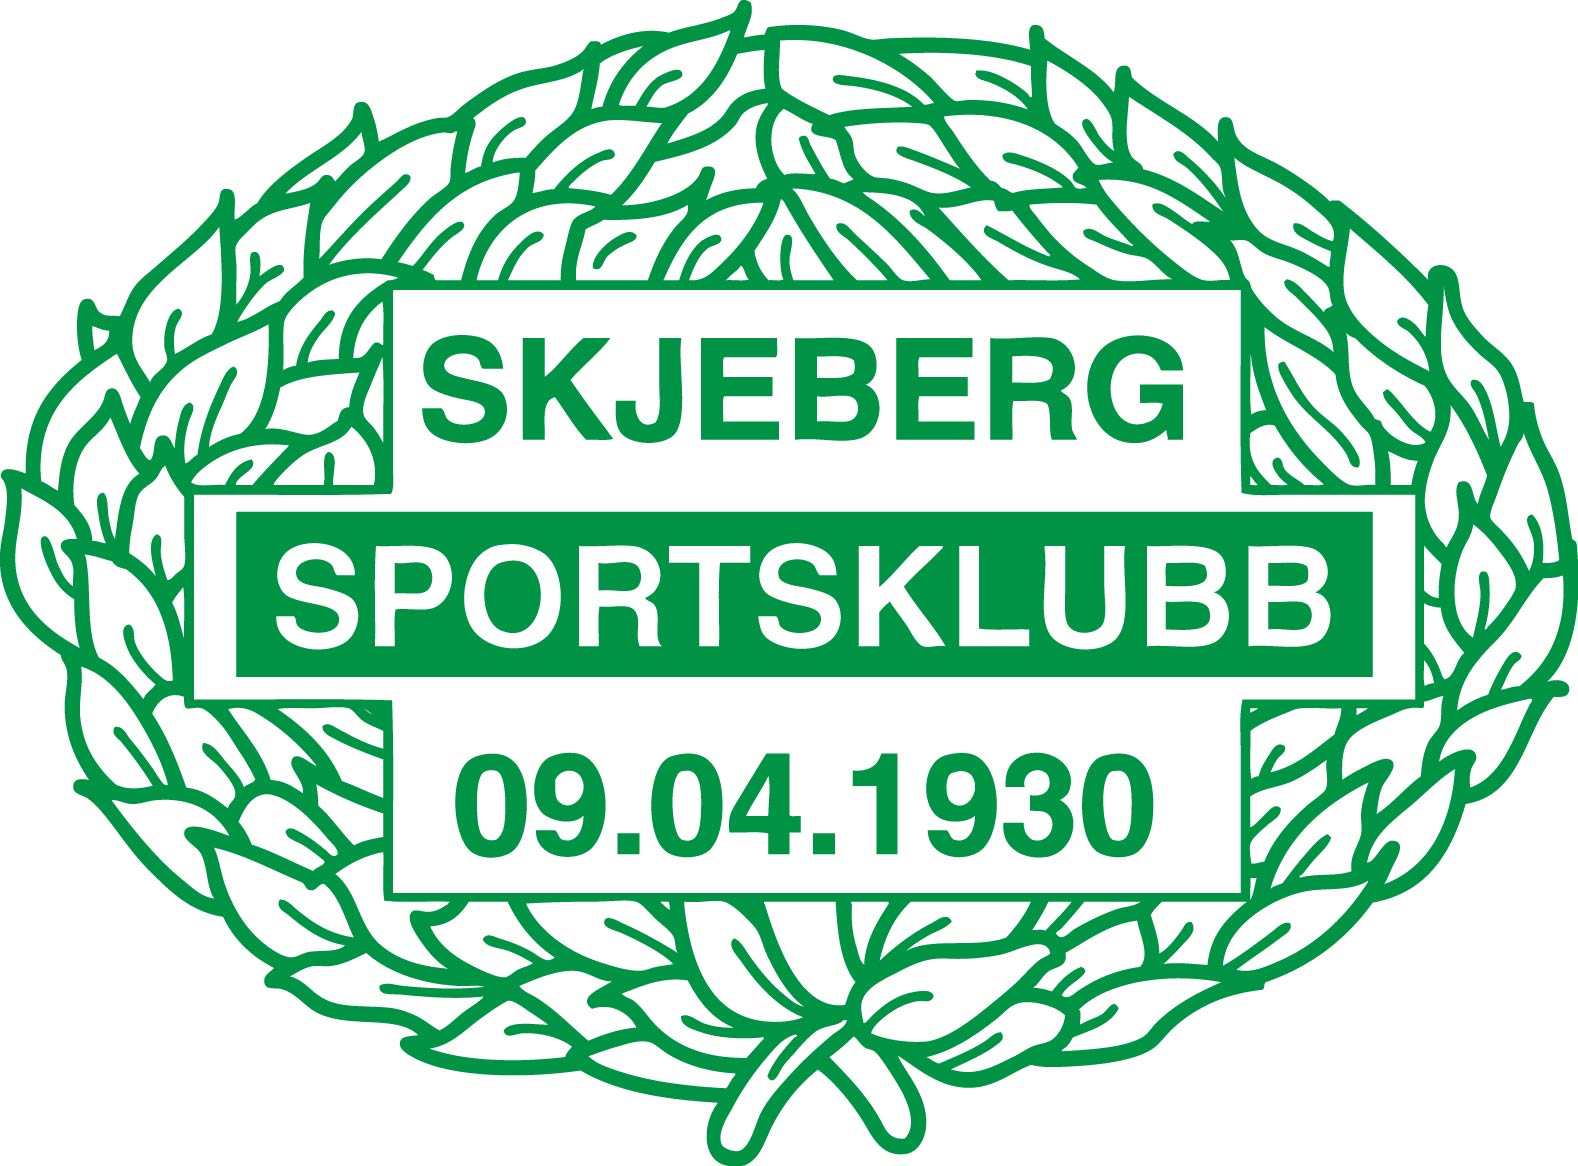 Skjeberg Sportsklubb